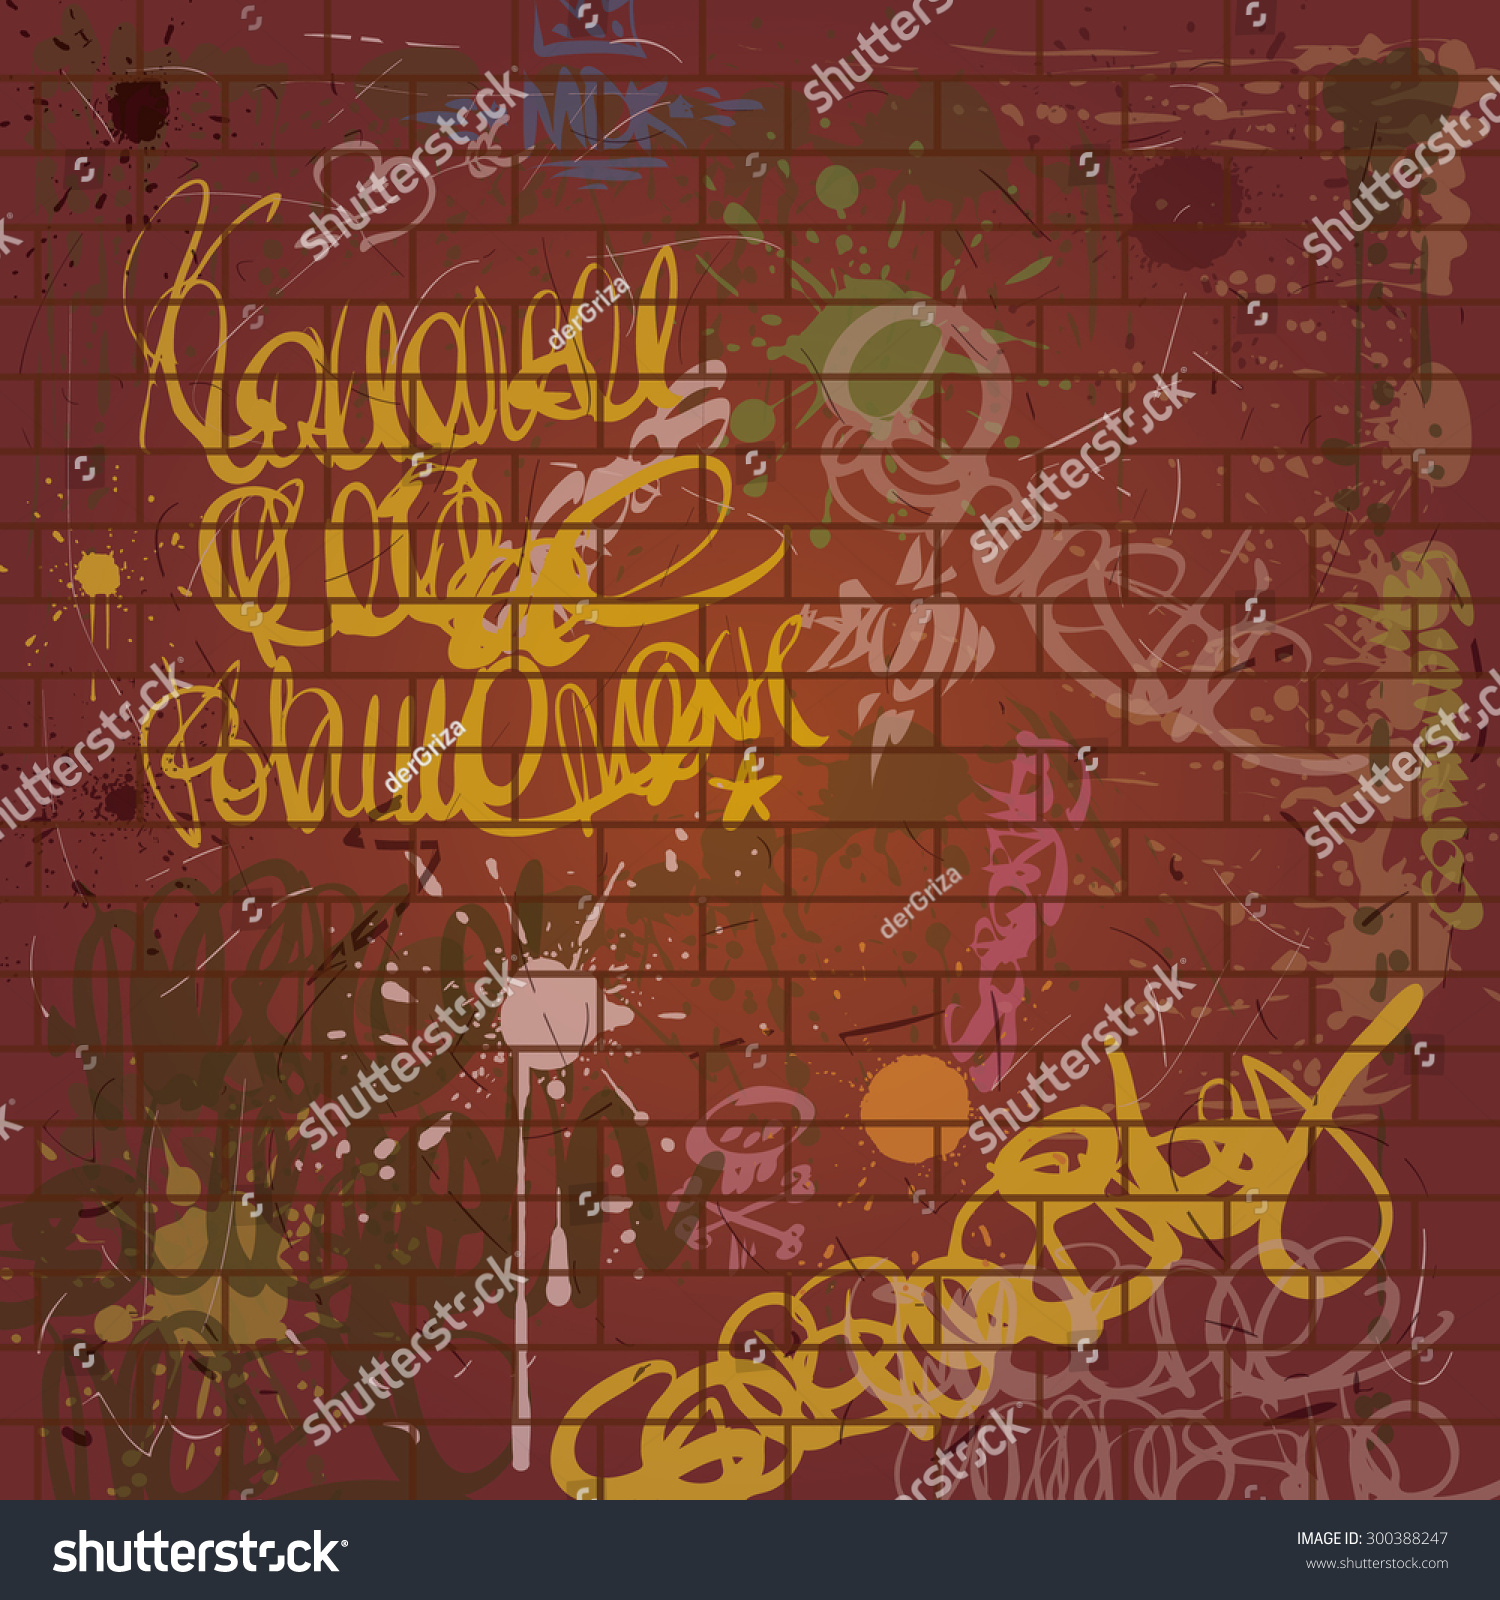 Hand Drawn Graffiti Background Stock Vector 300388247 - Shutterstock